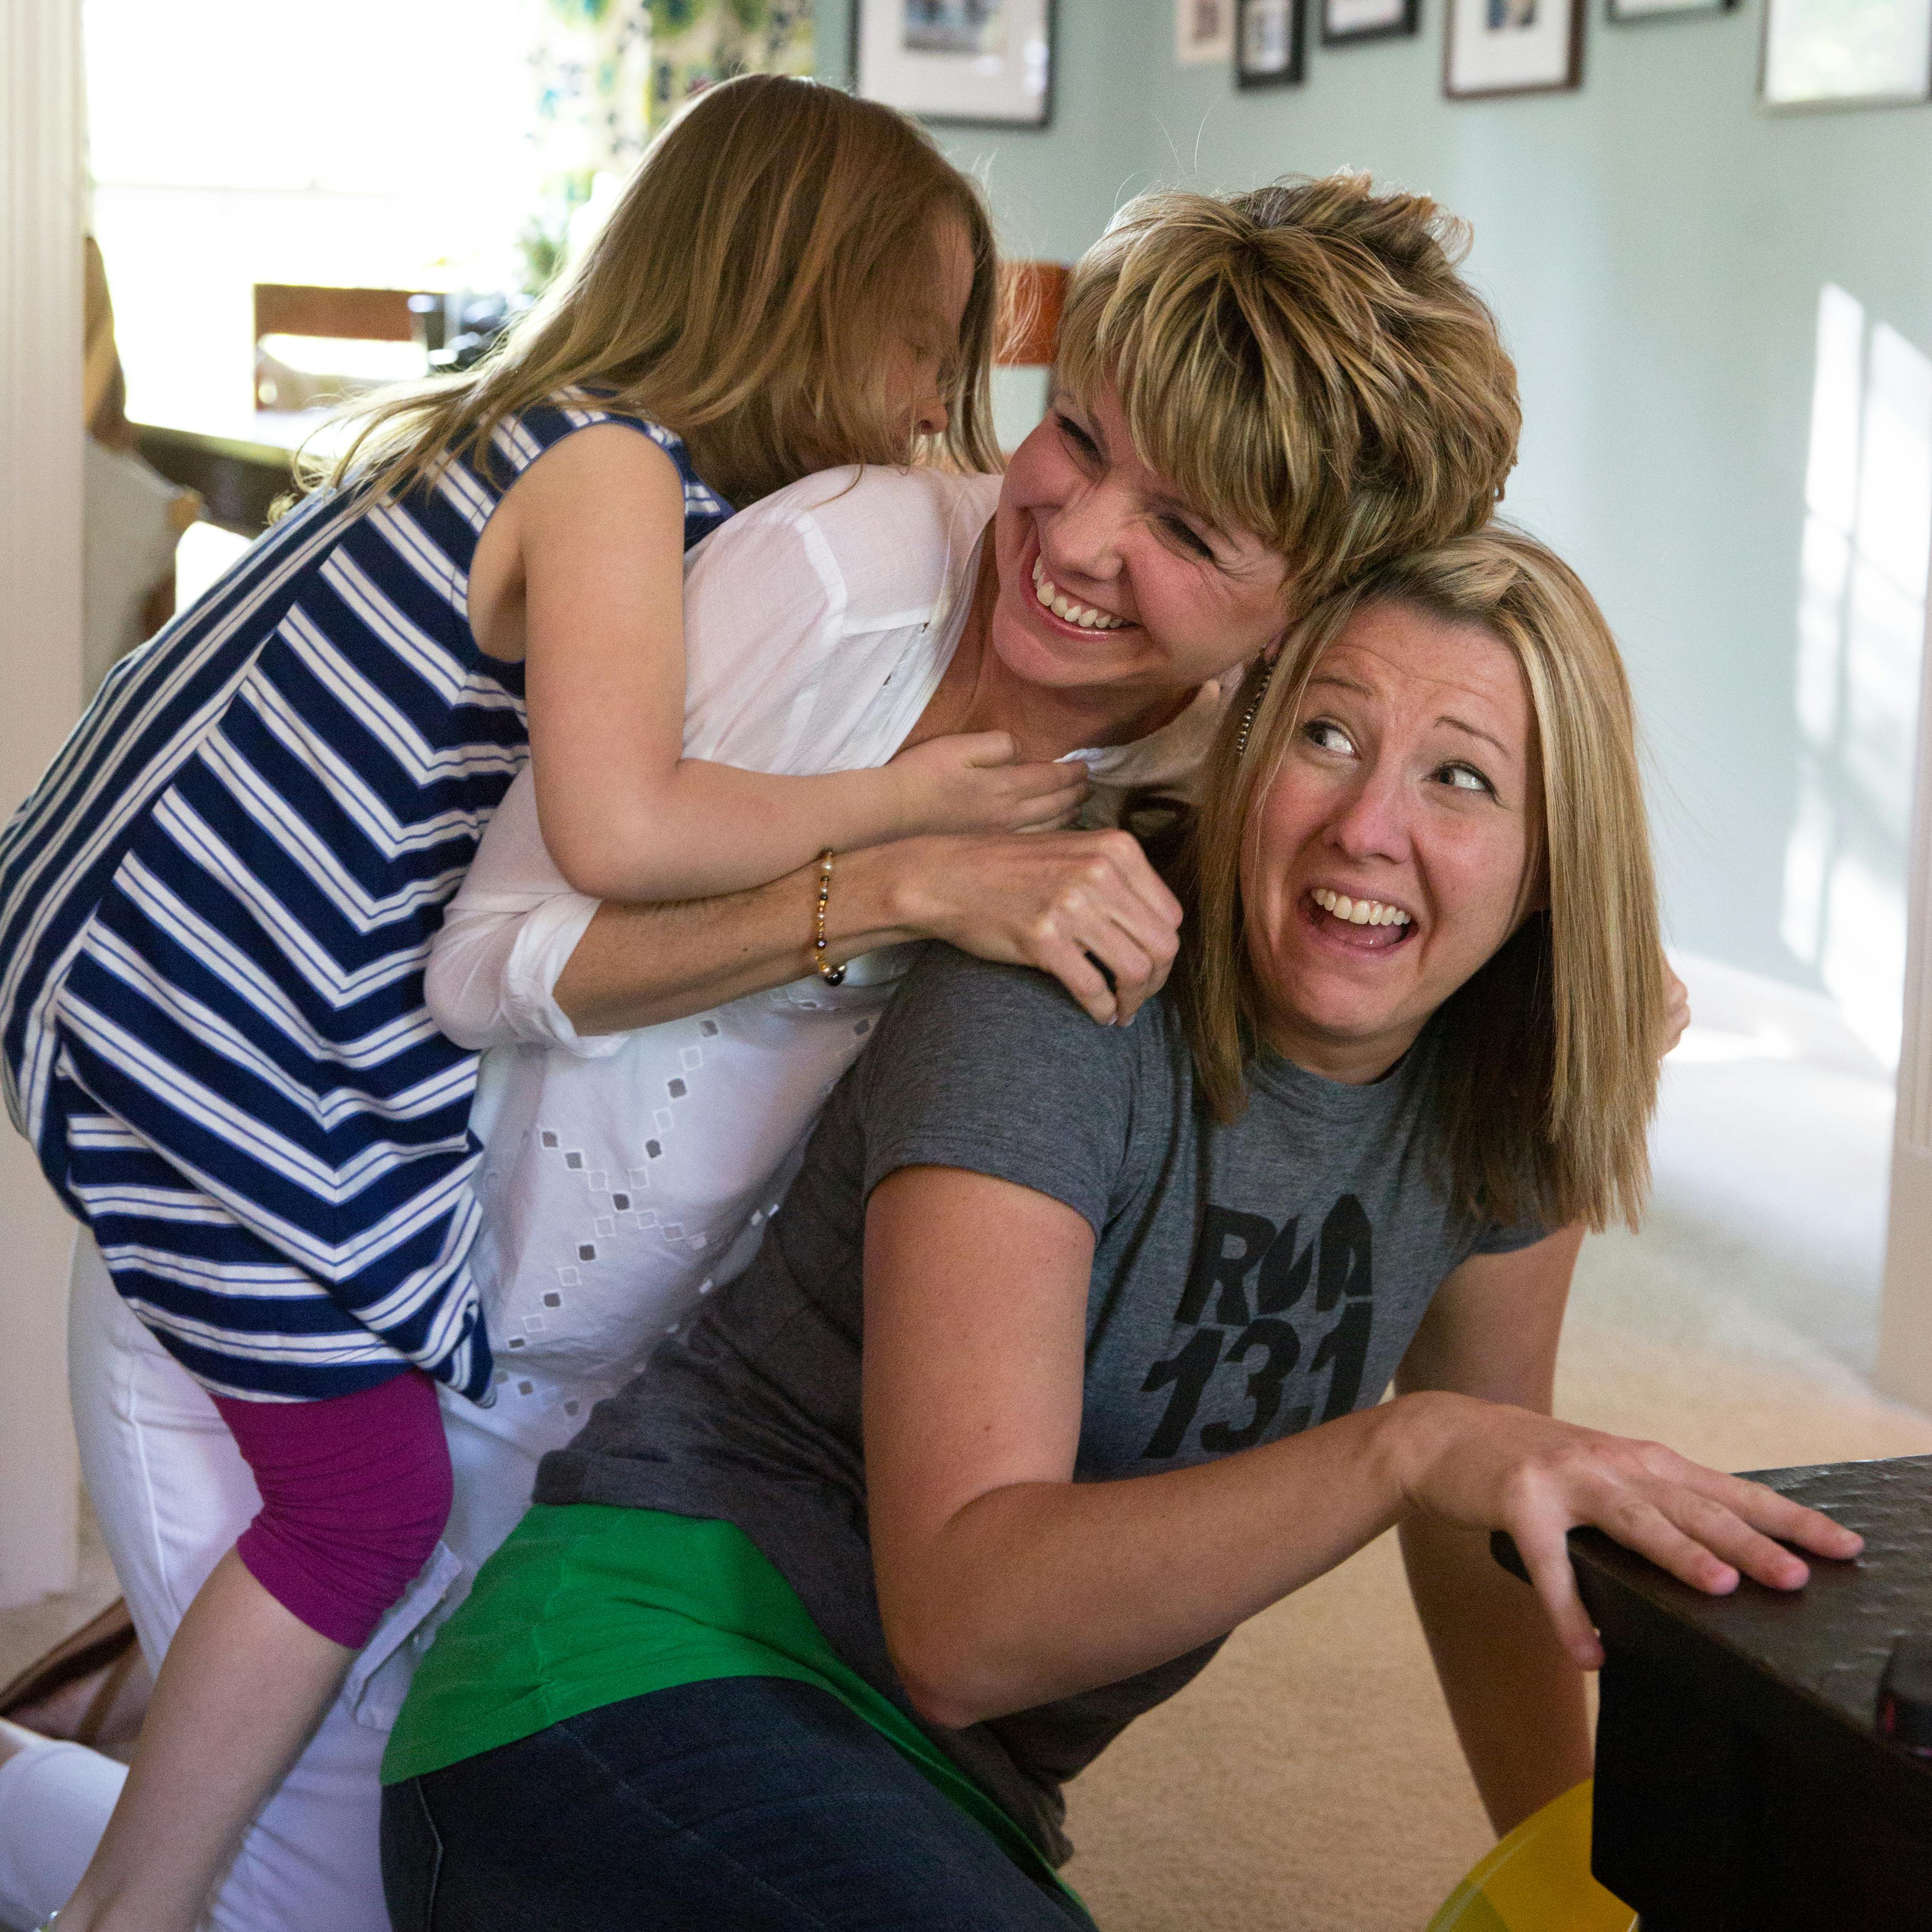 Three generations of woman having fun | Source: Pexels